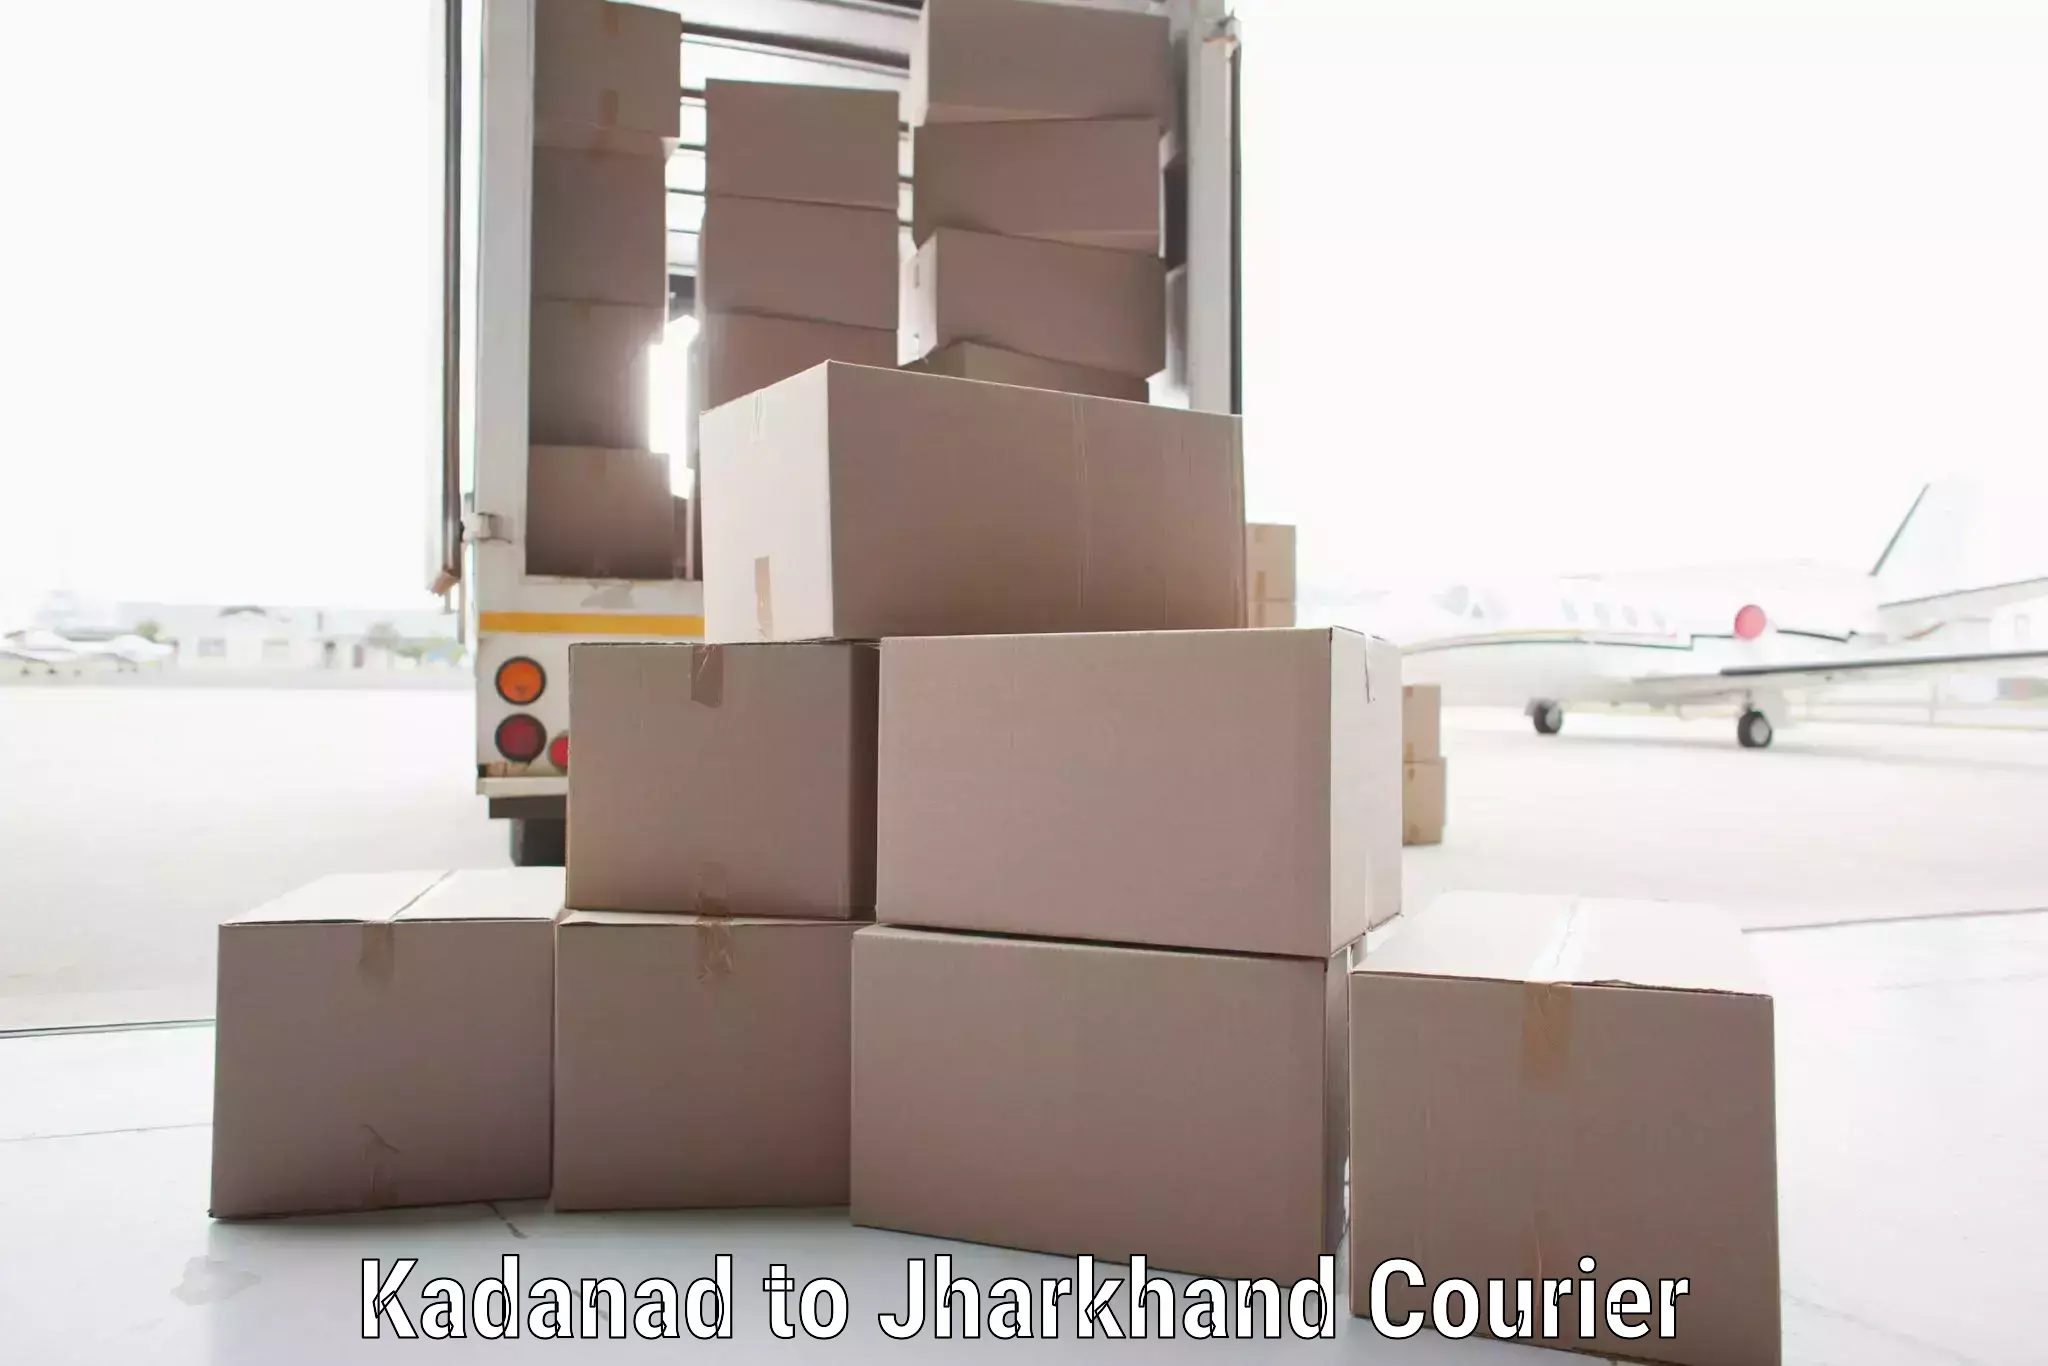 Global shipping solutions Kadanad to Ranchi